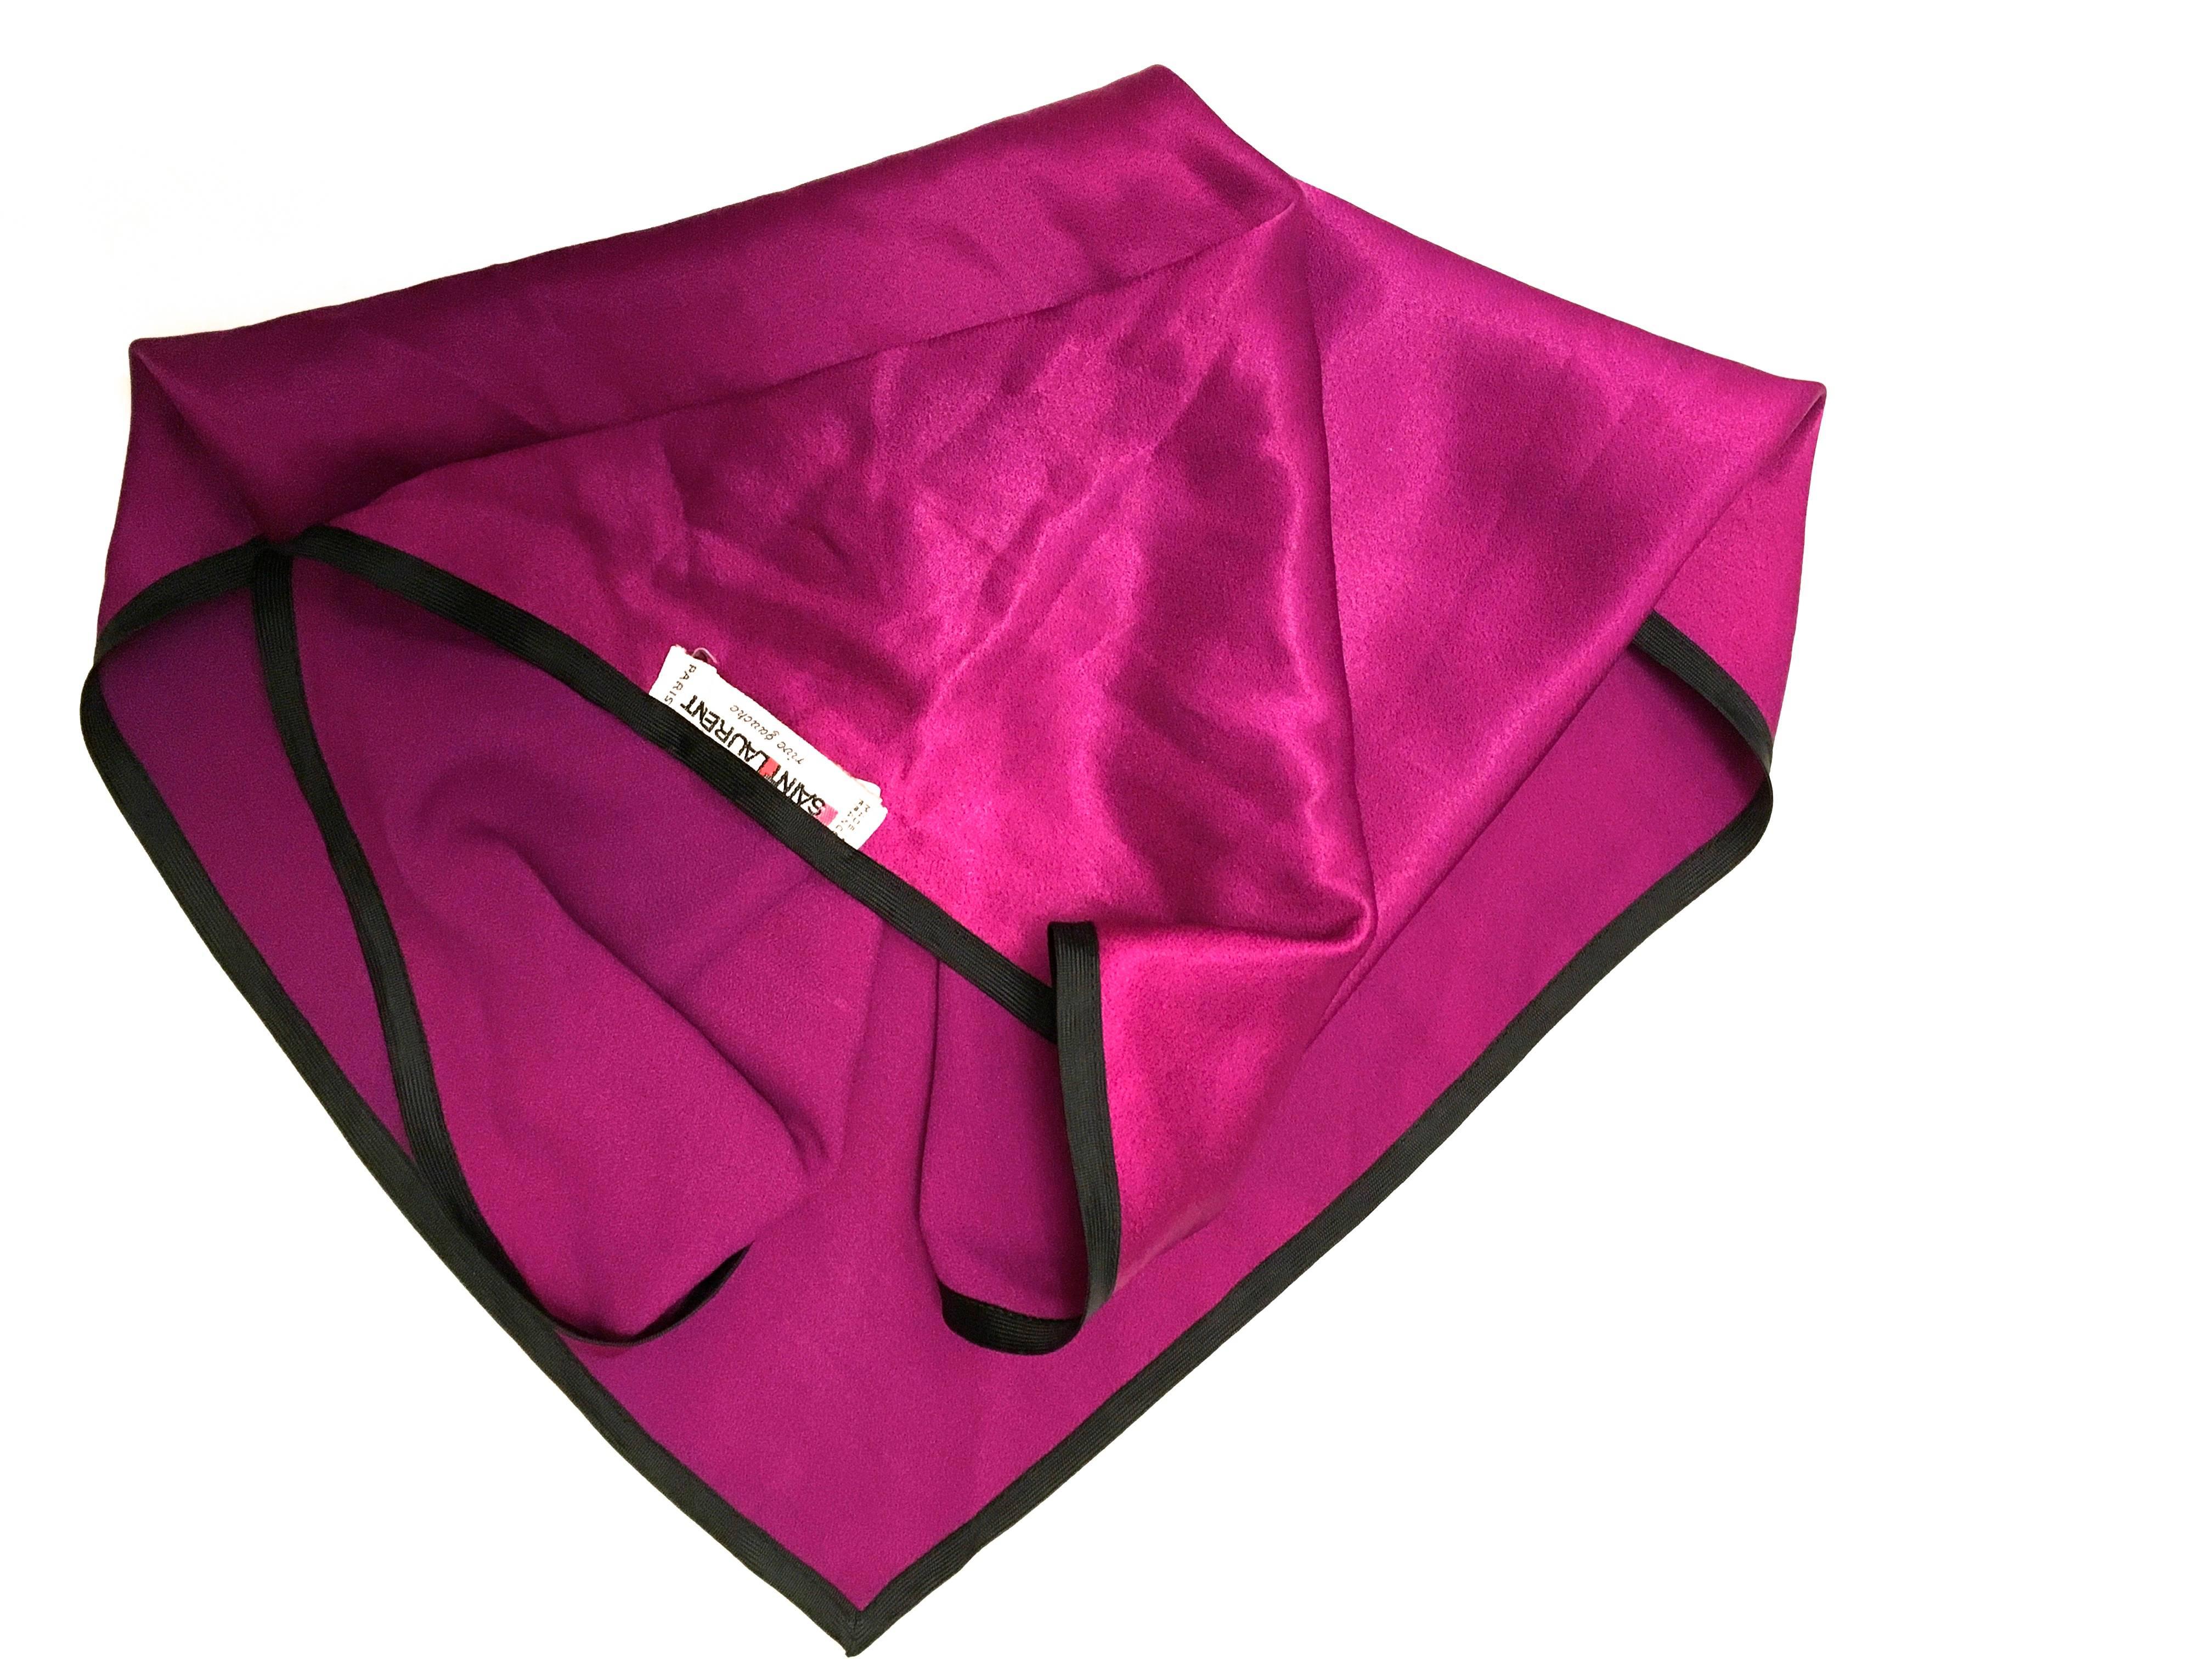 Yves Saint Laurent / YSL silk scarf / shawl vintage For Sale 1